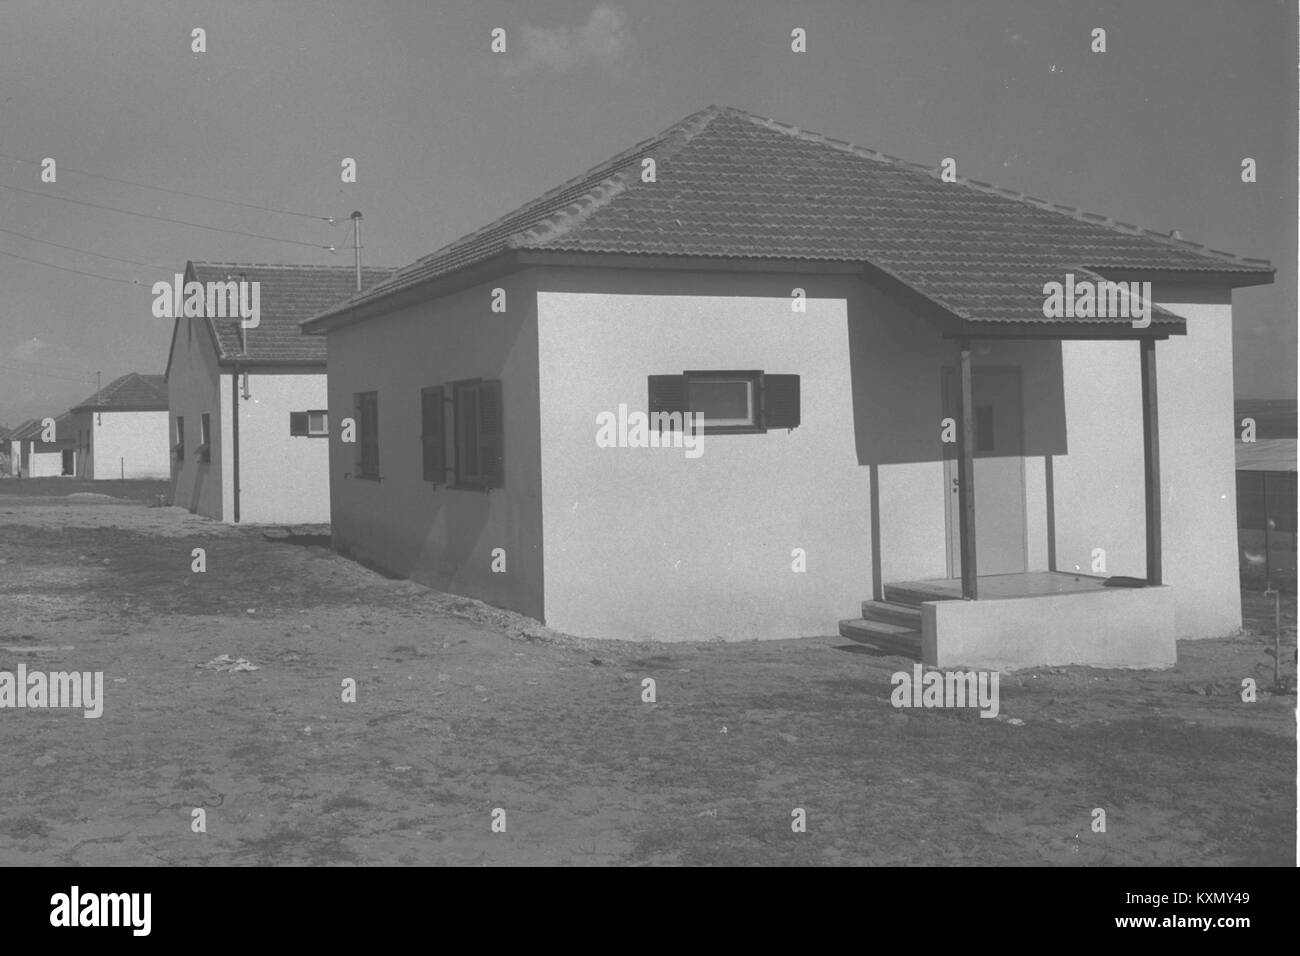 A LINE OF HOUSES AT KFAR SHMARYAHU. בתים בכפר שמריהו.D28-068 Stock Photo